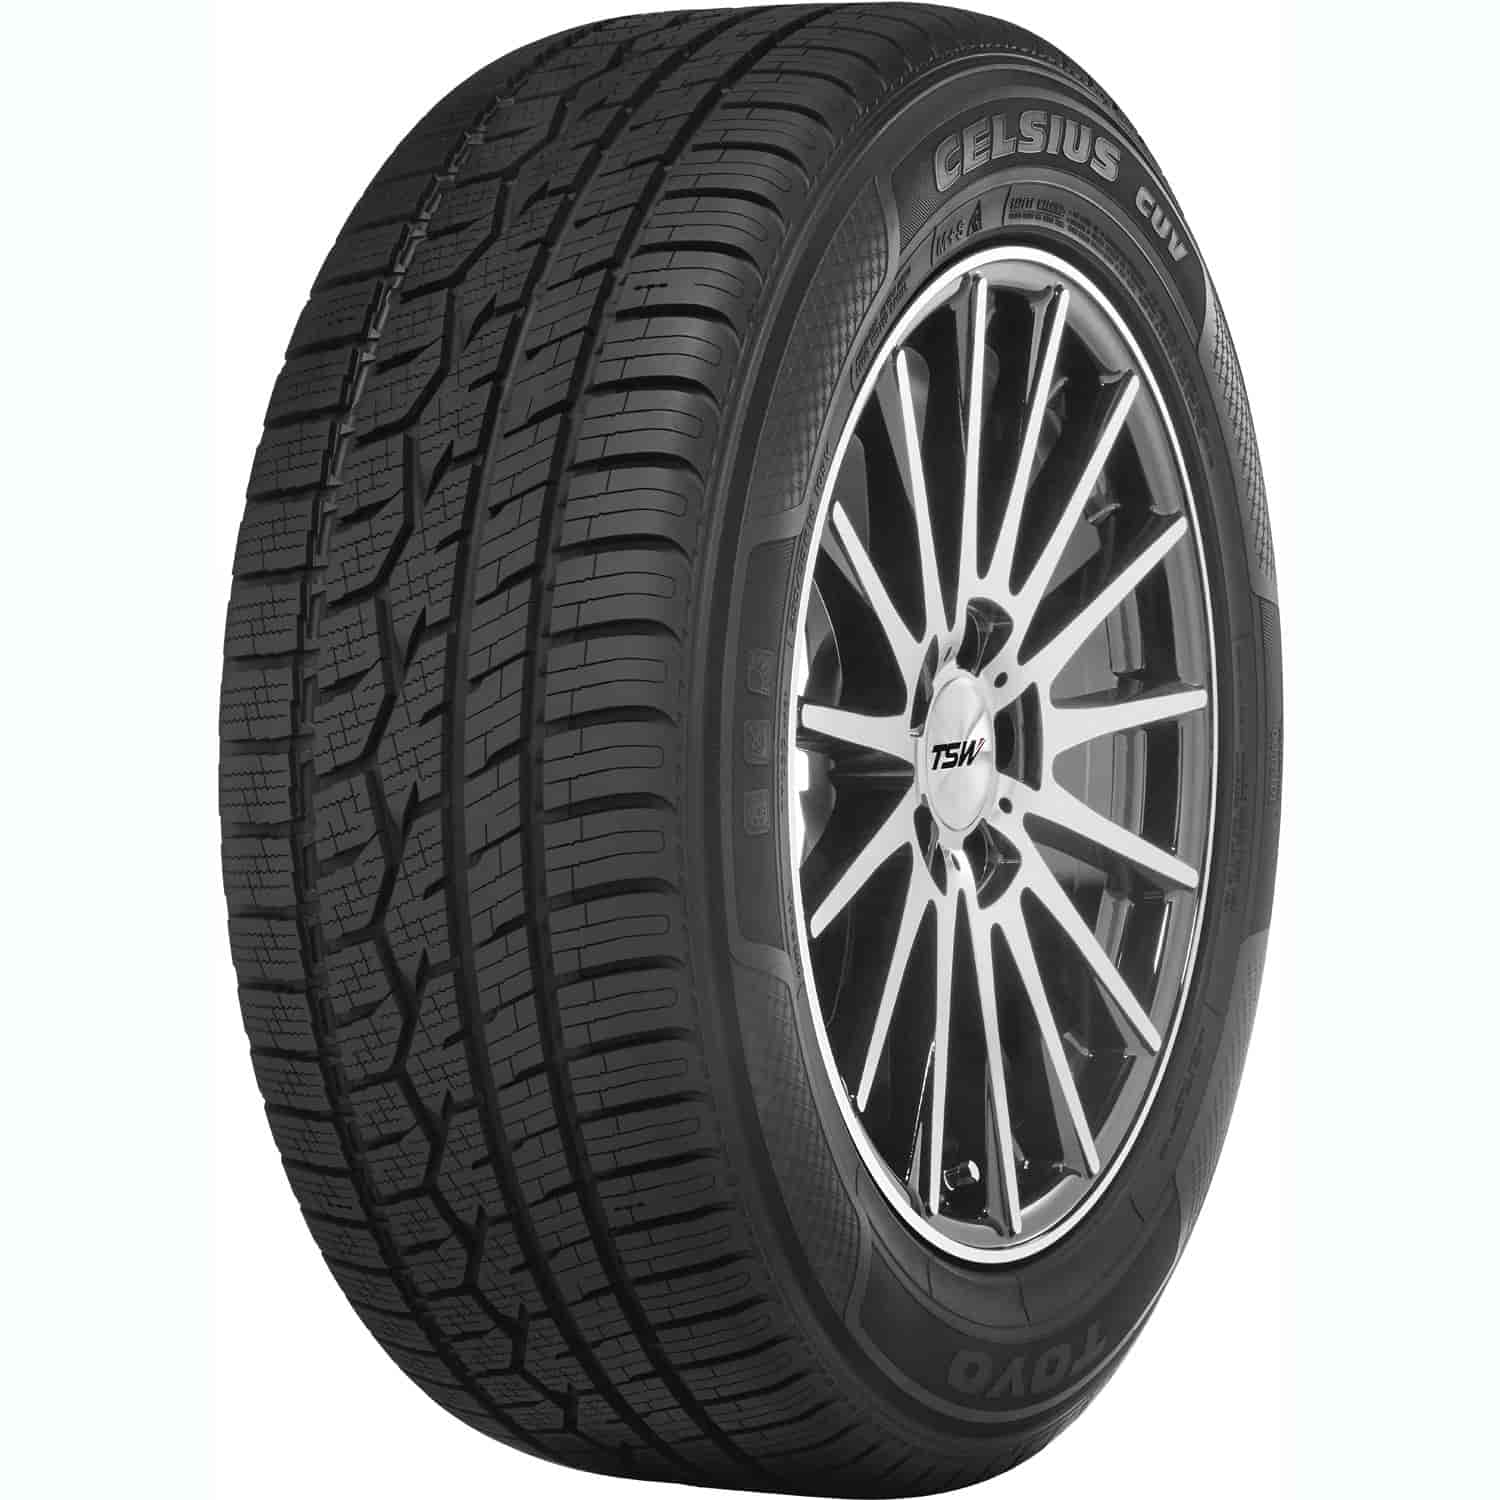 Celsius CUV Tire 235/45R19